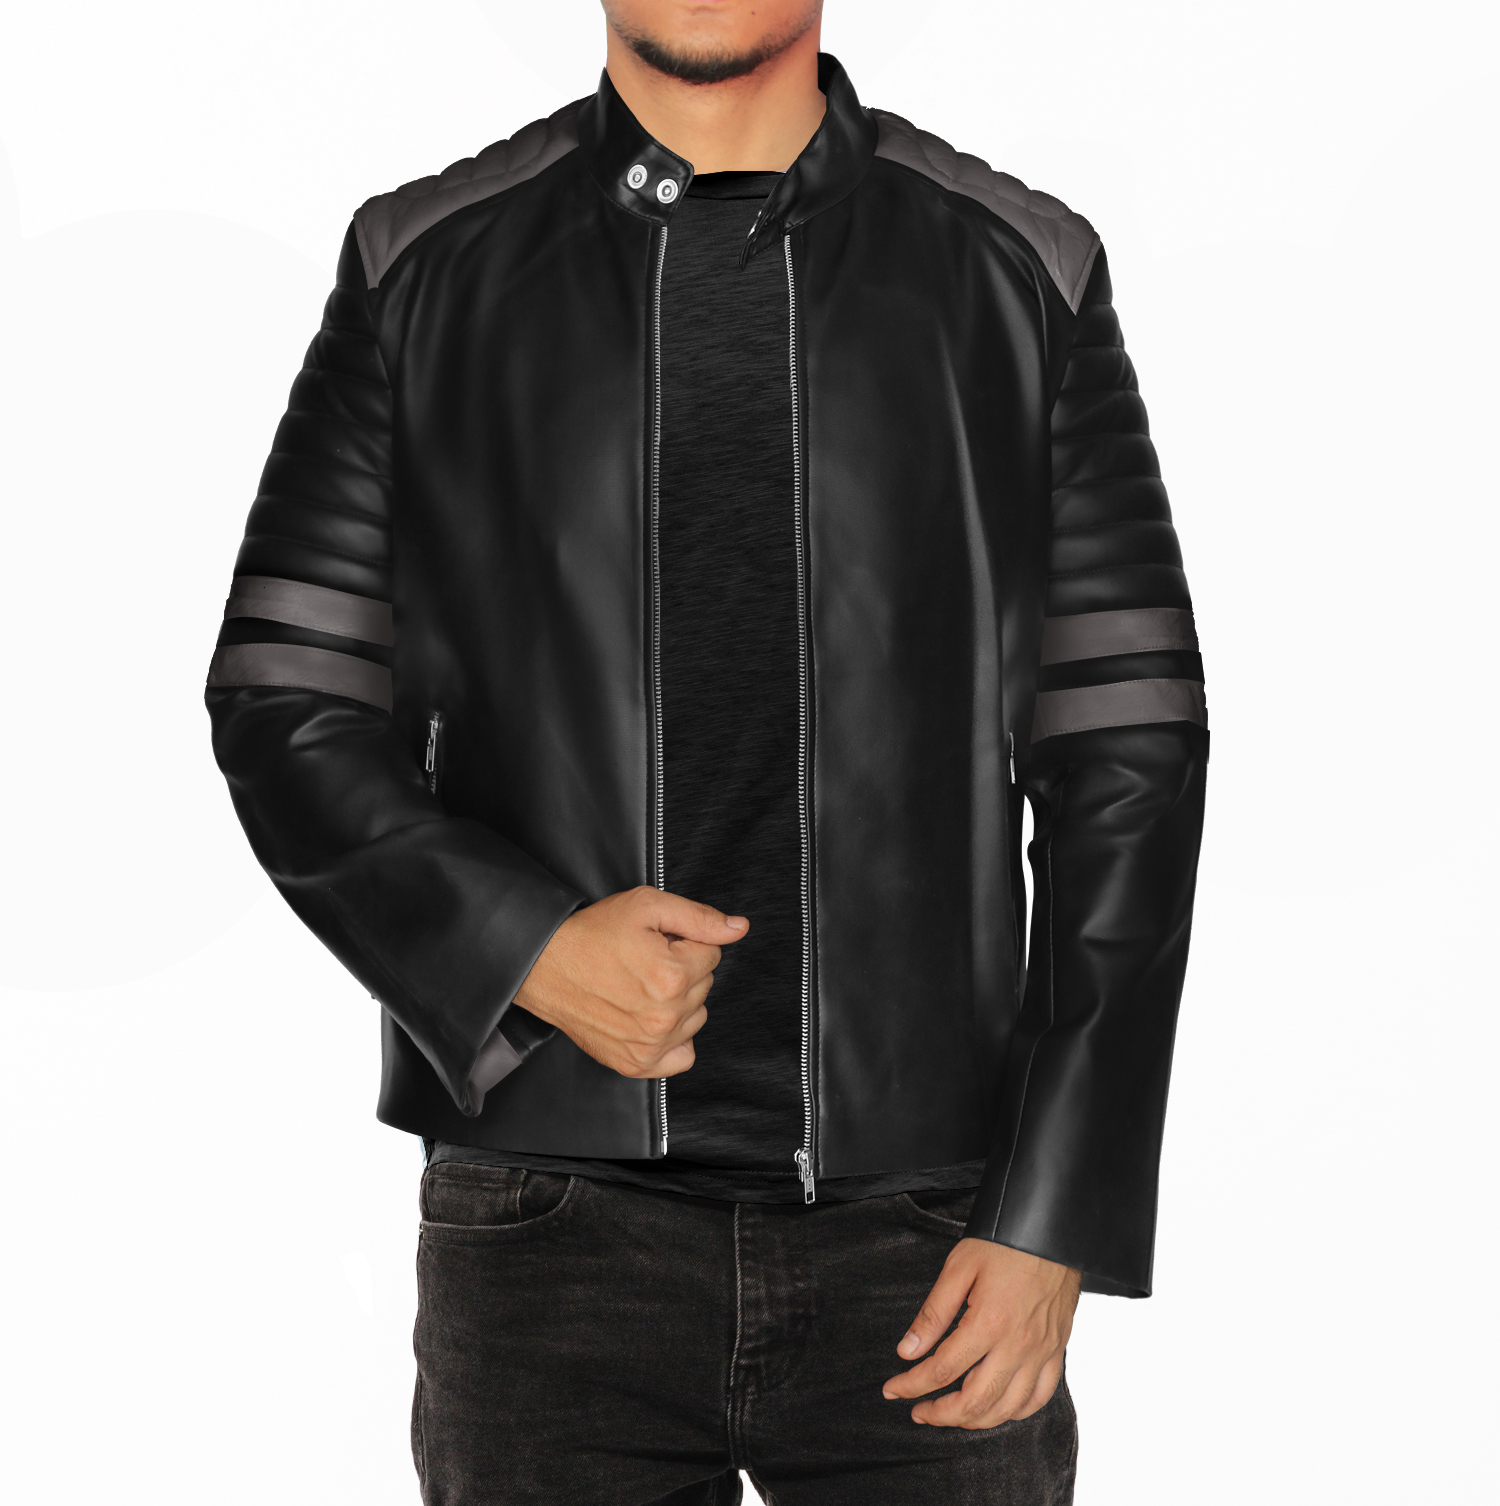 NomiLeather black leather jacket | mens leather jacket and genuine leather jacket men (Black With Grey Strip ) Medium - image 2 of 7